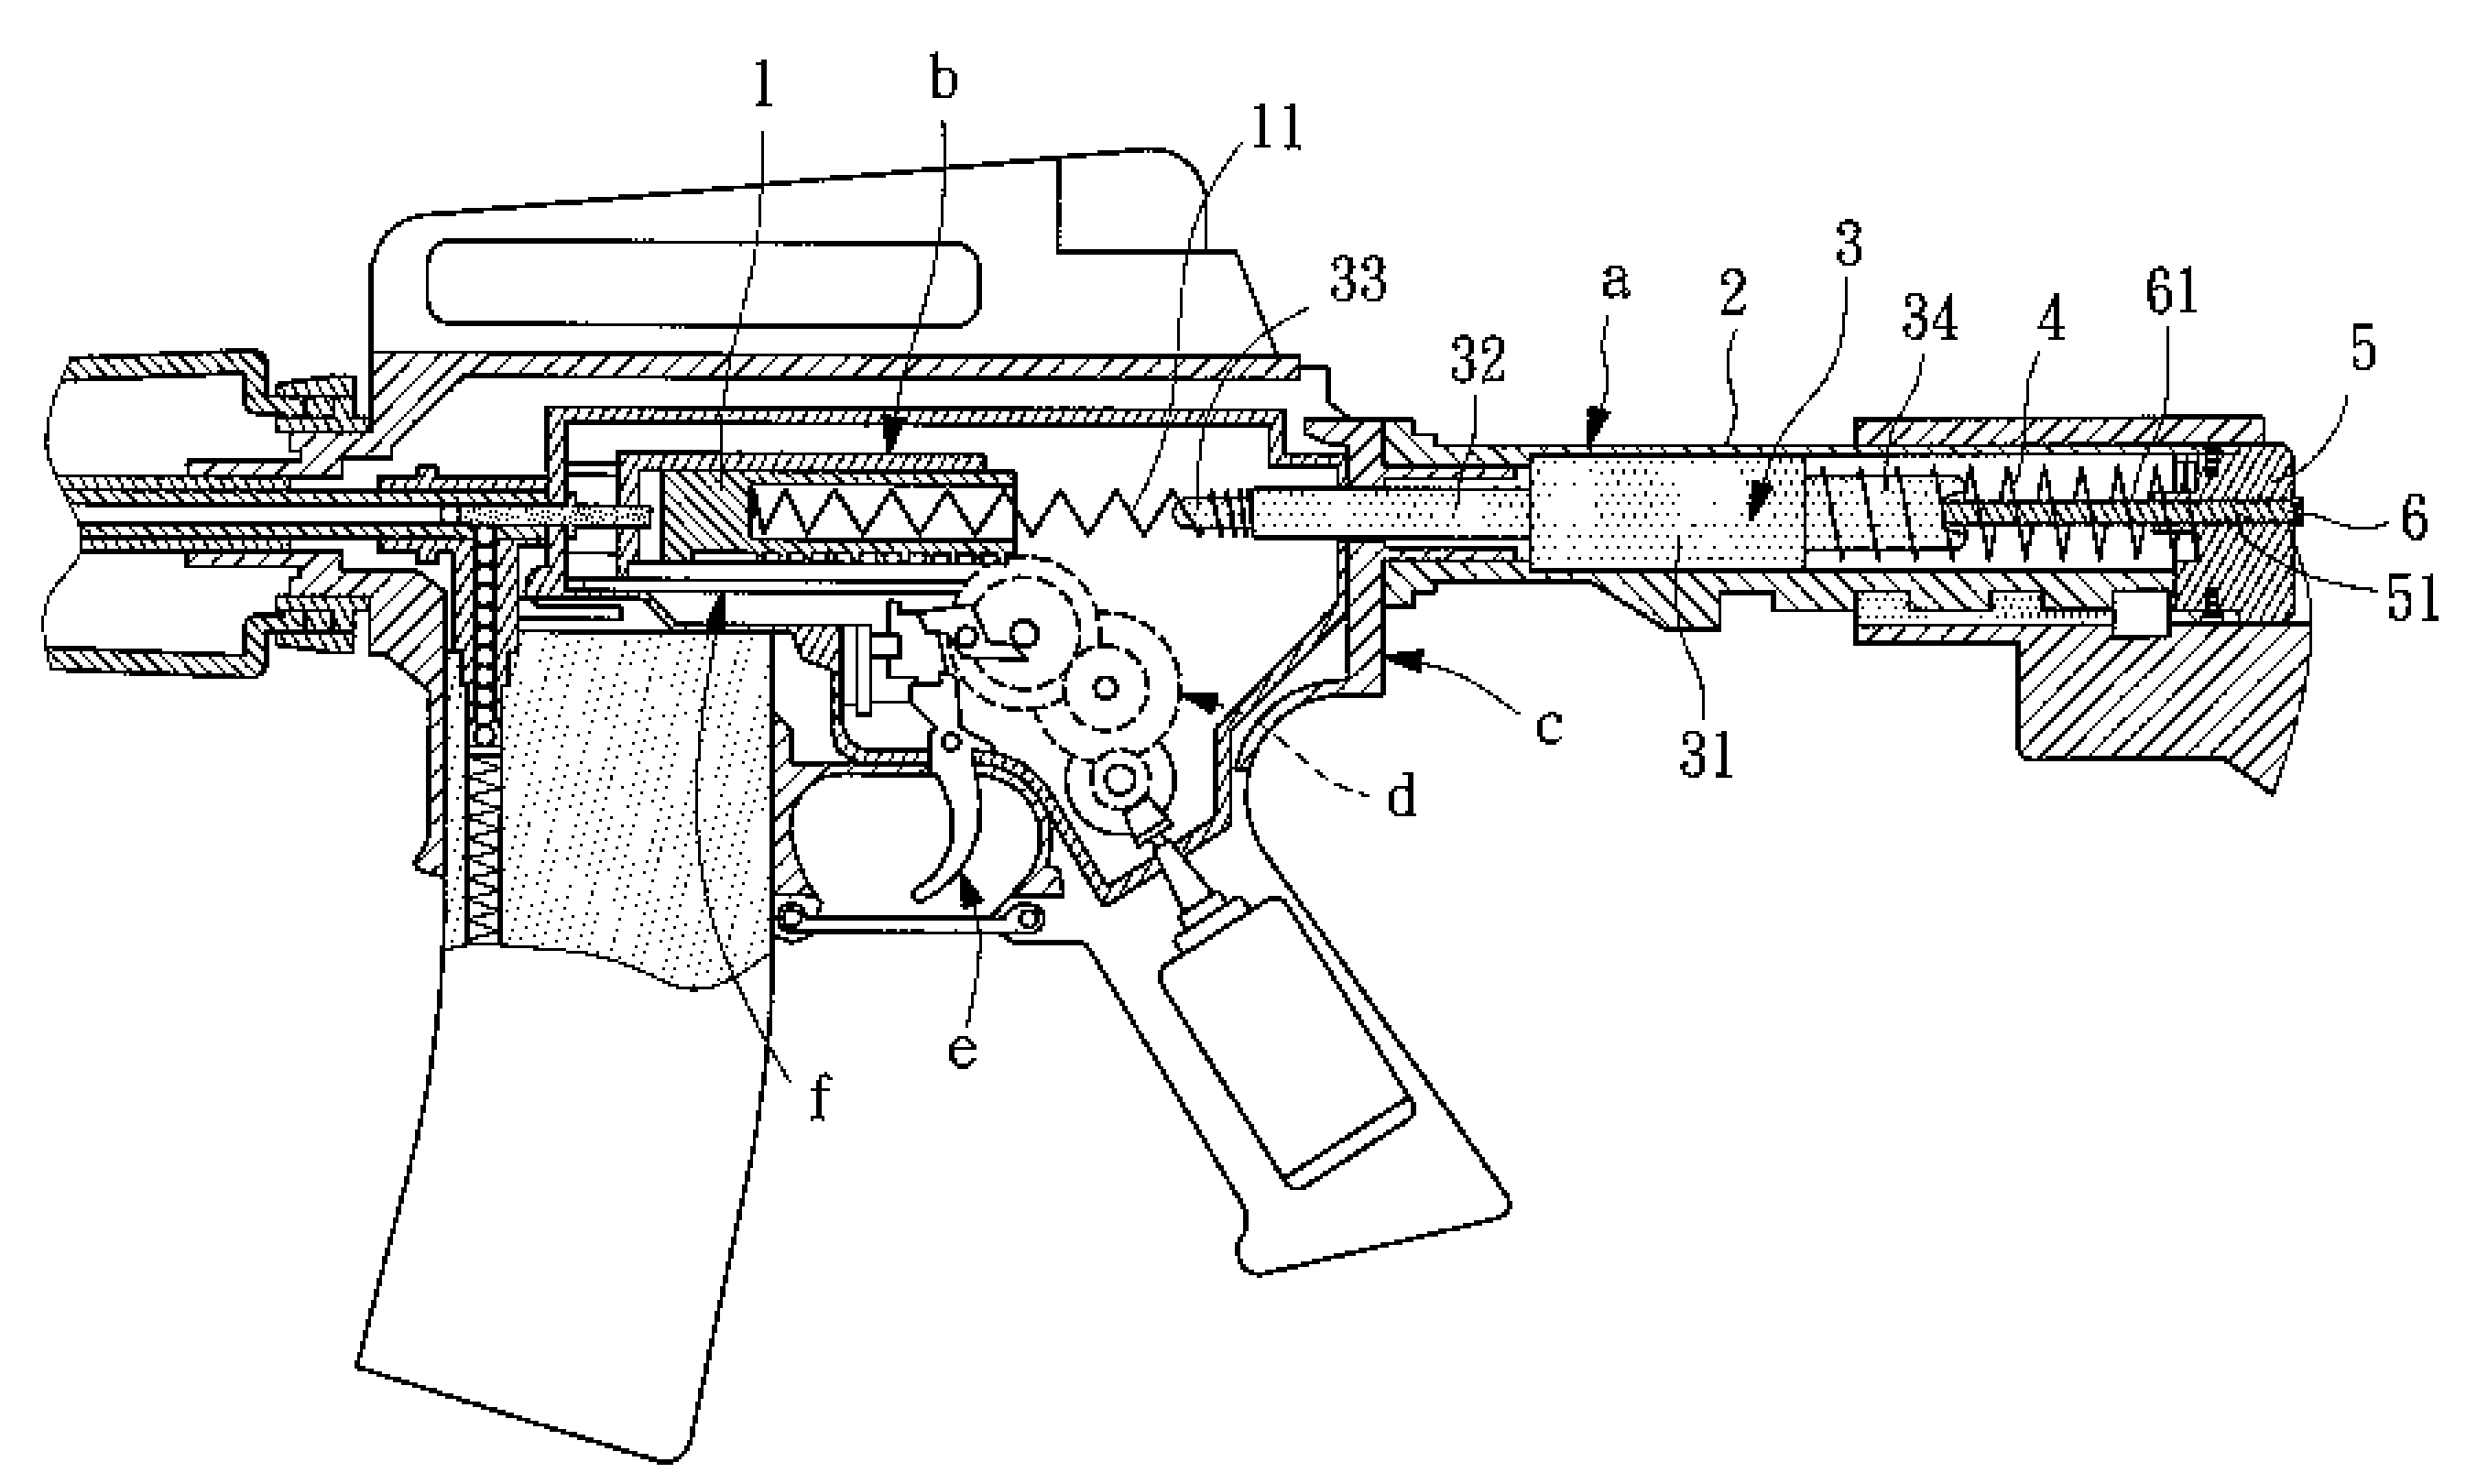 Toy rifle backlash vibration structure